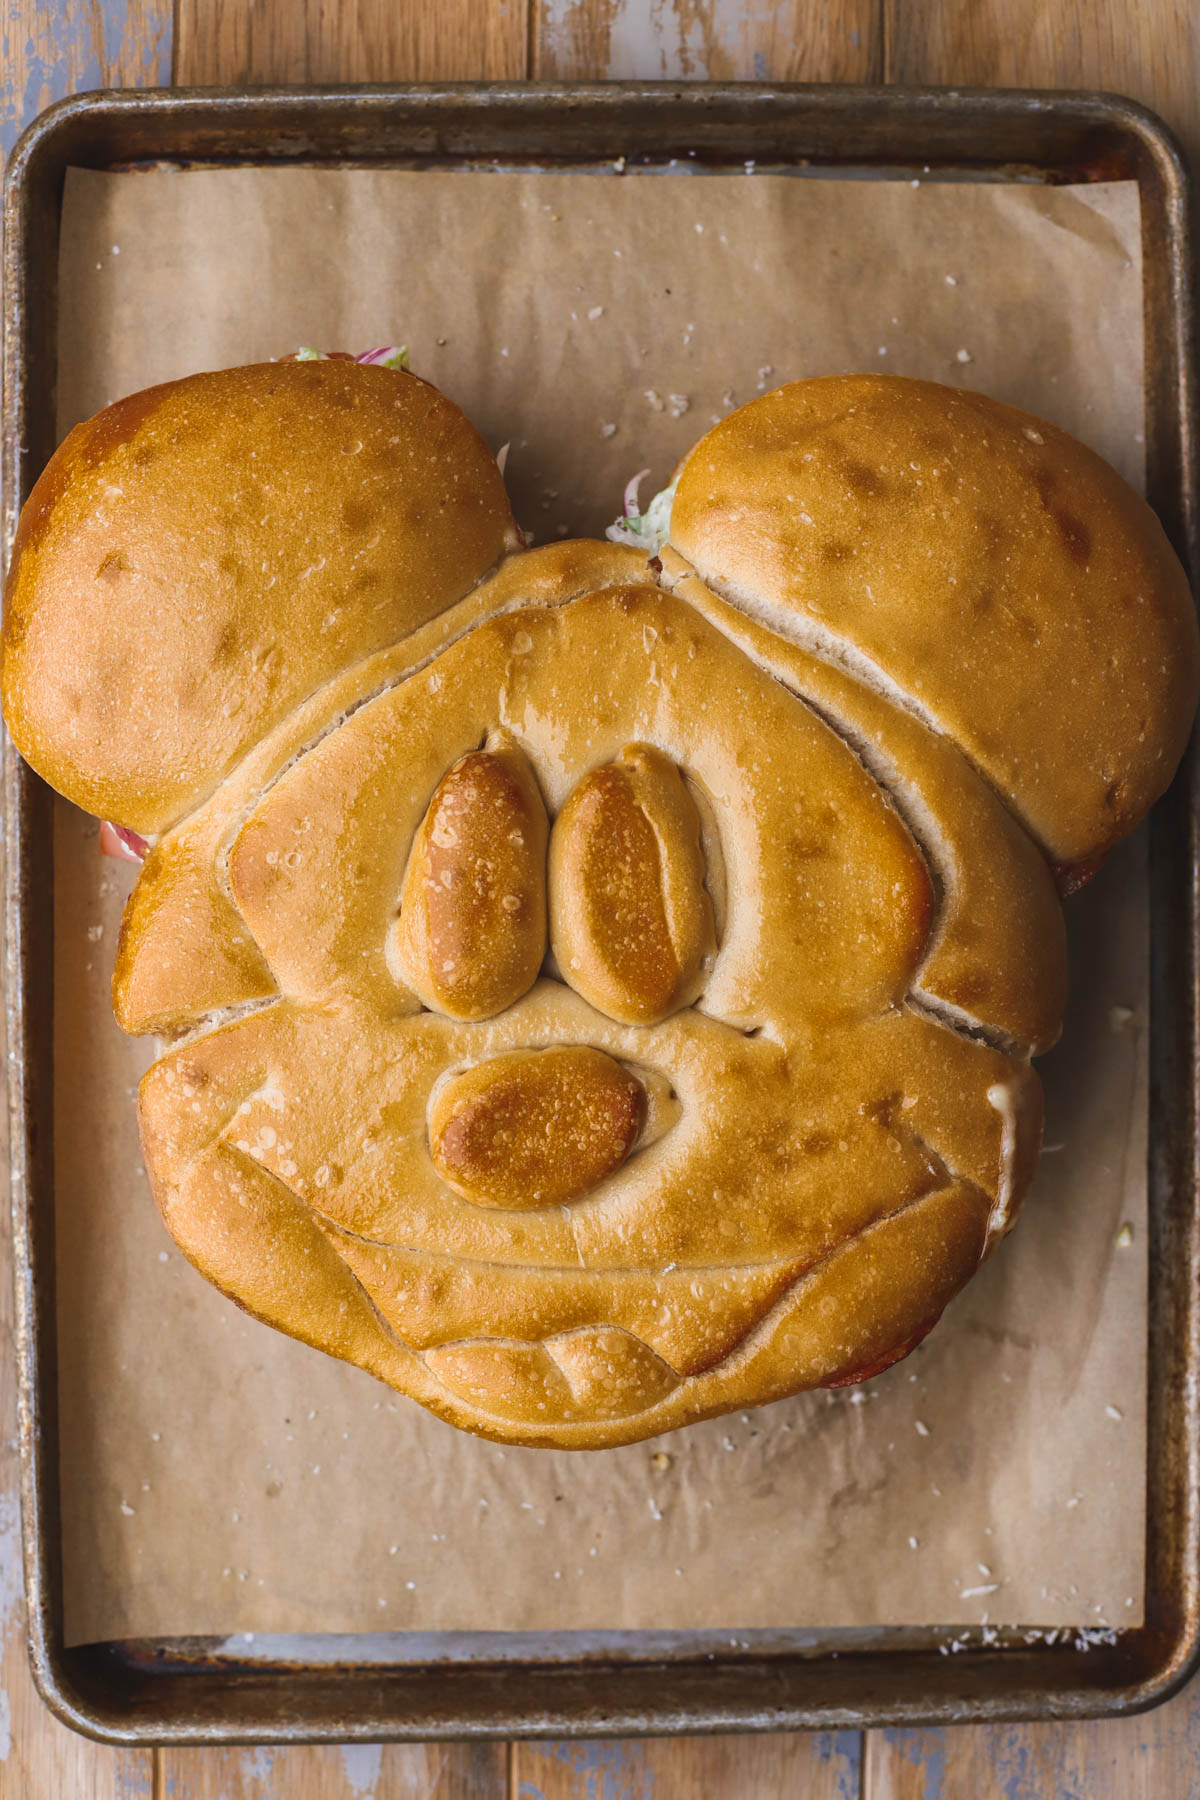 Mickey shaped Italian grinder sandwich.  